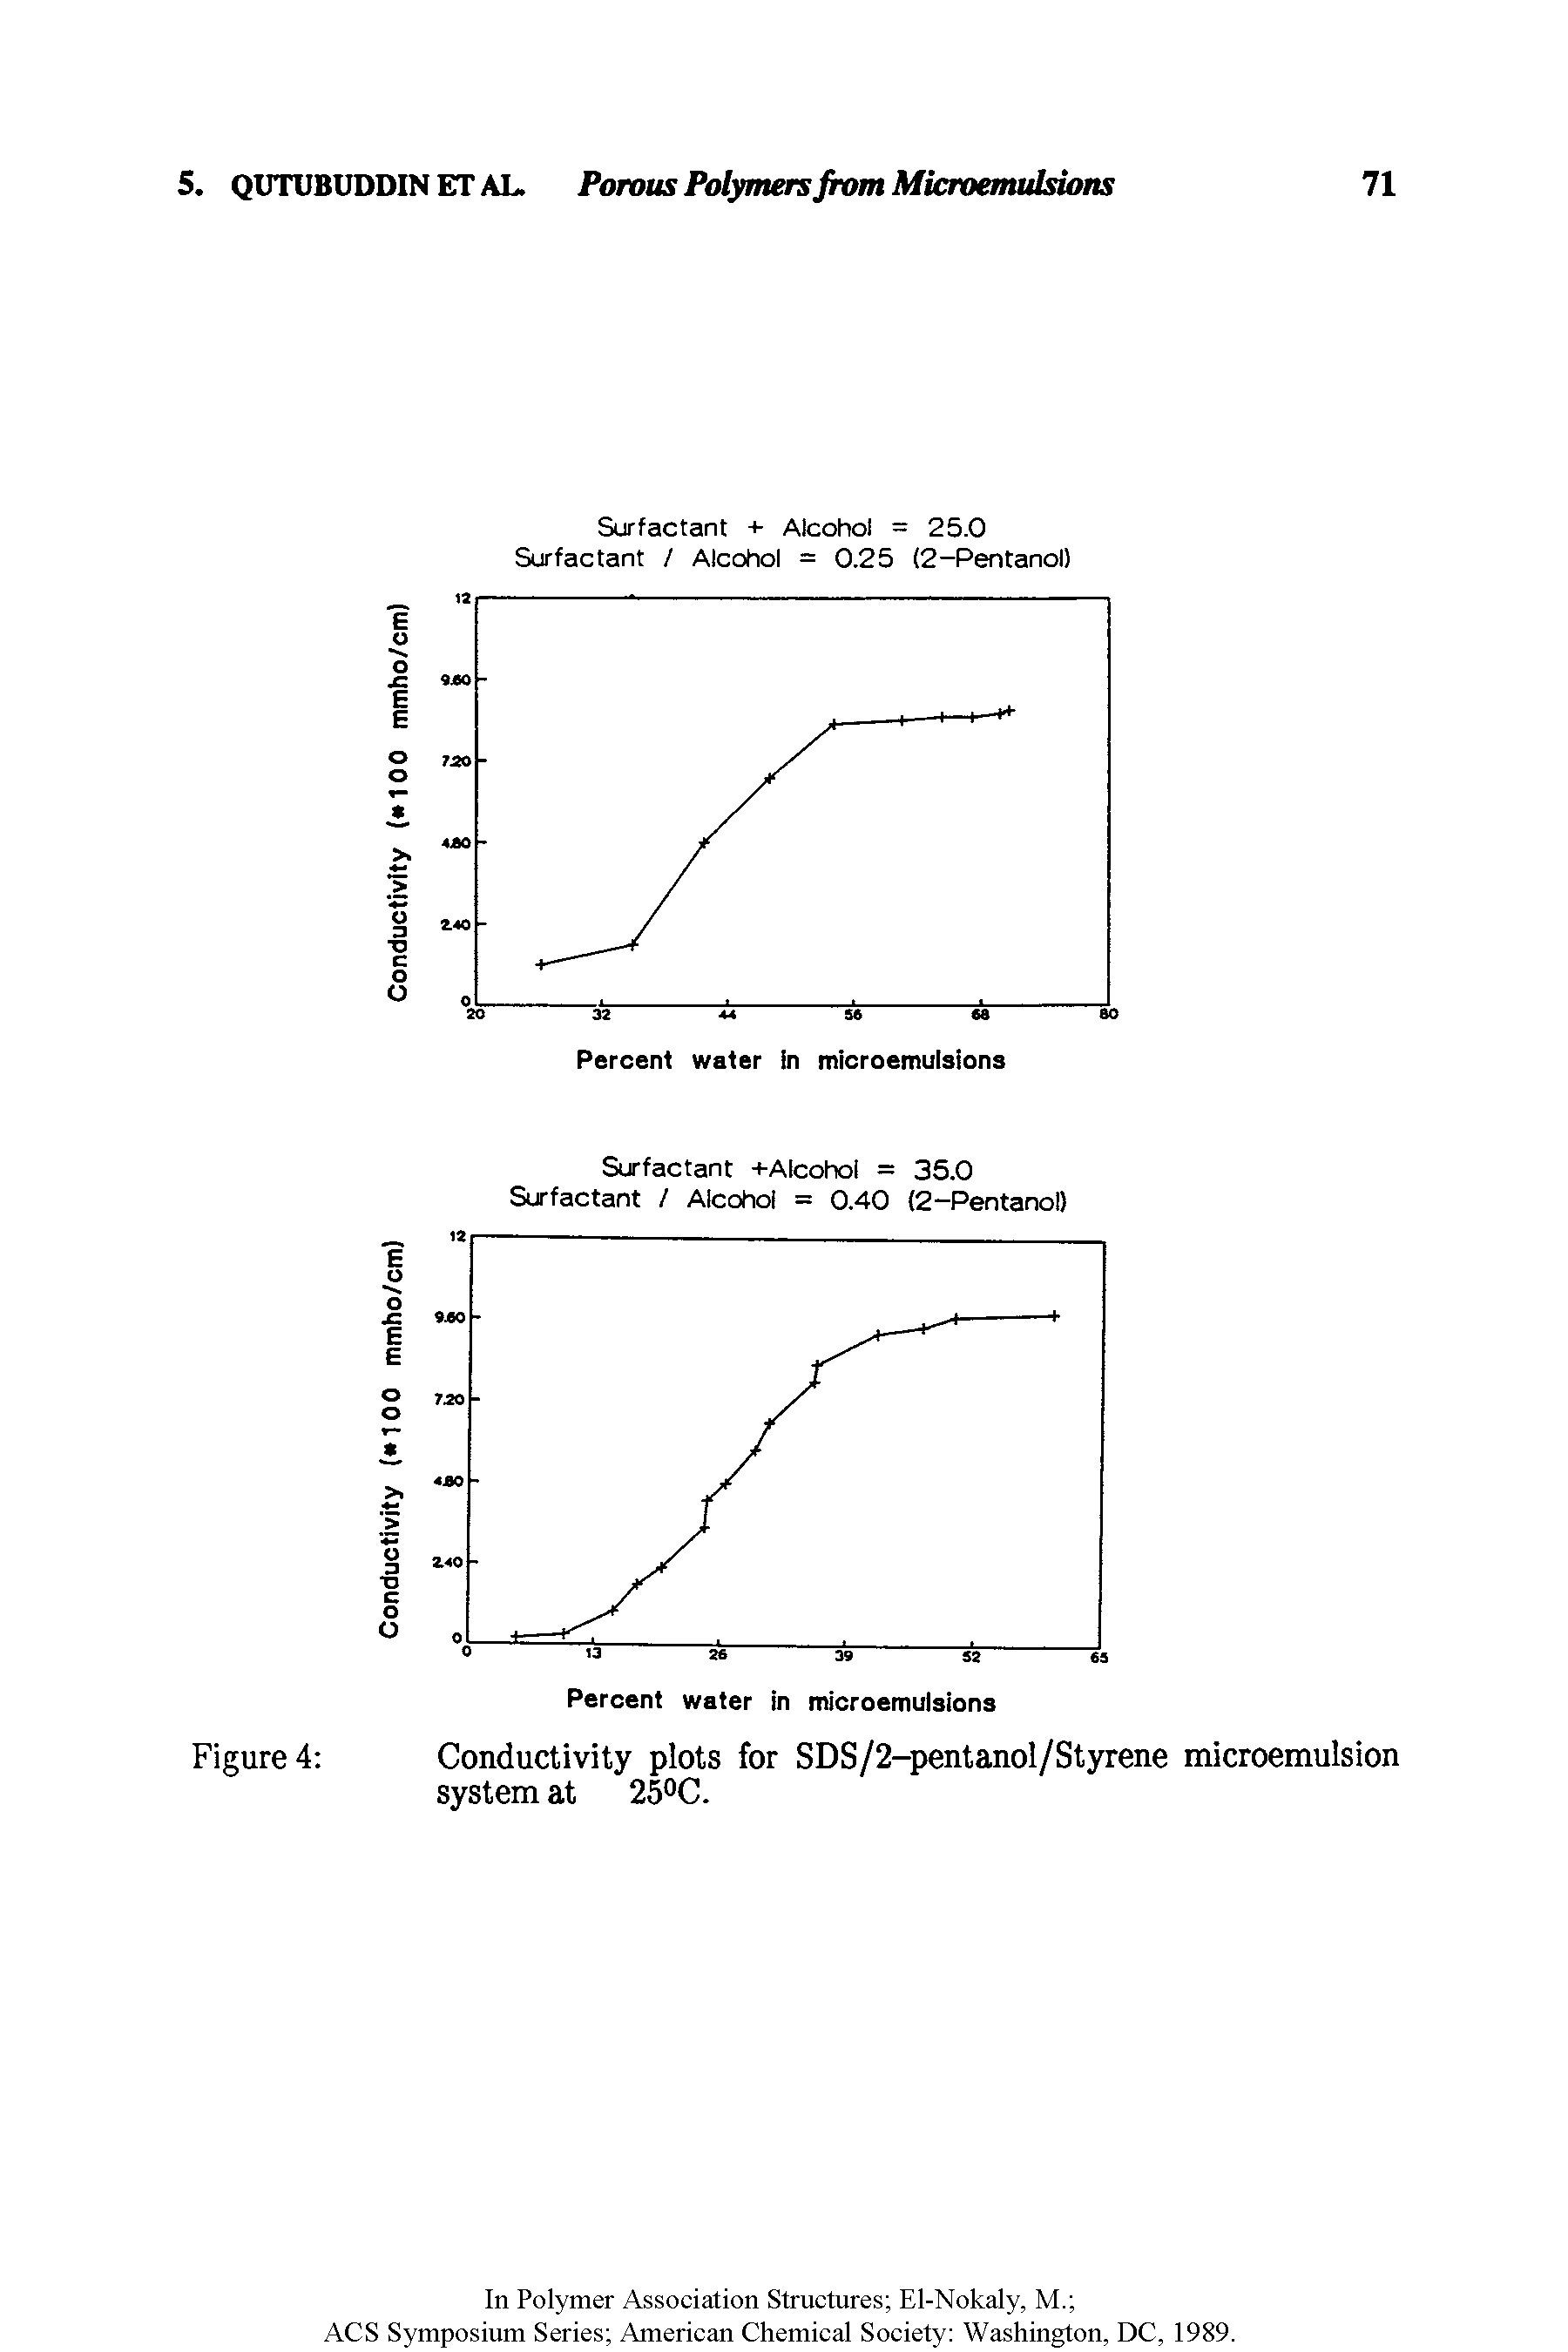 Figure 4 Conductivity plots for SDS/2-pentanol/Styrene microemulsion system at 25°C.